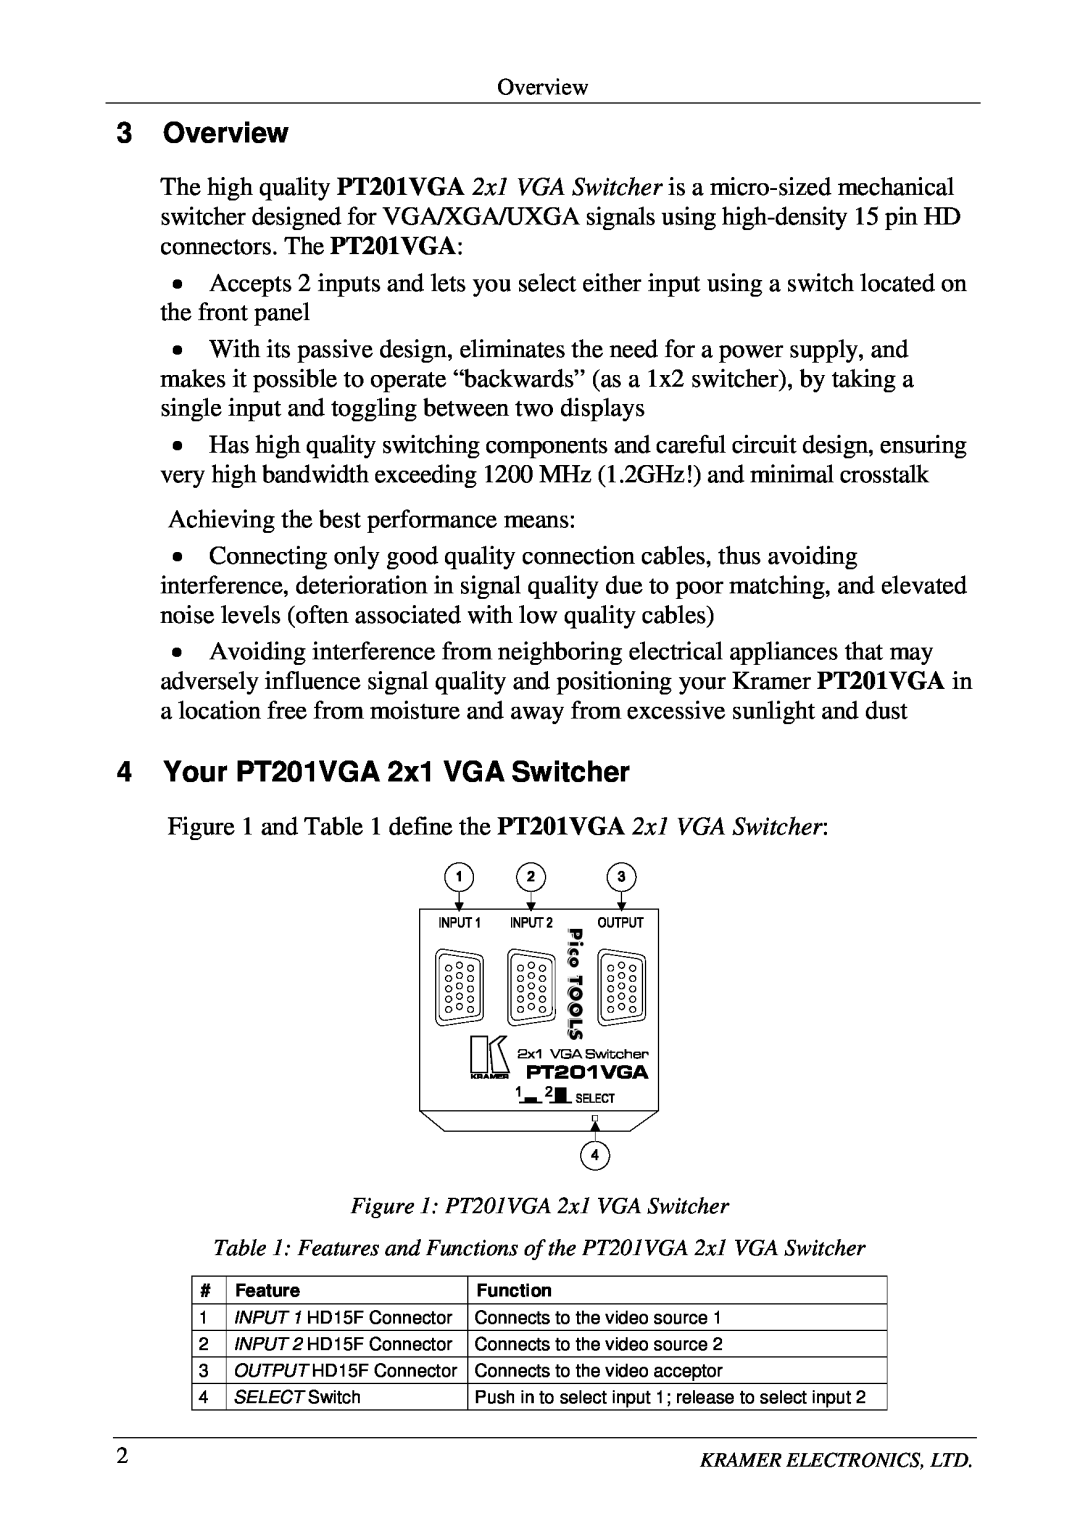 Kramer Electronics user manual 3Overview, Your PT201VGA 2x1 VGA Switcher 